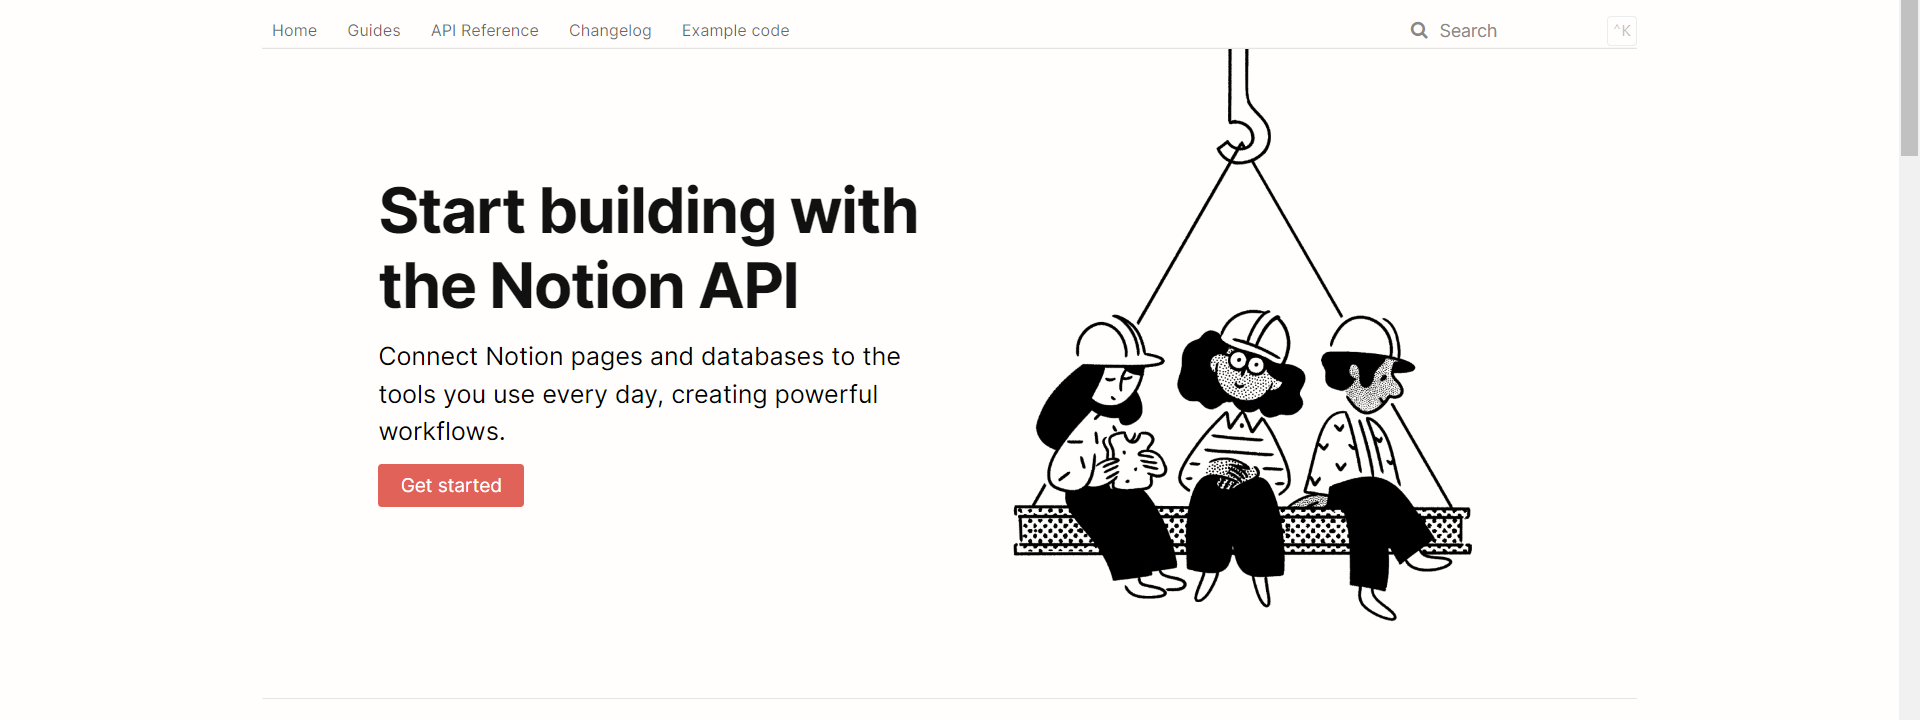 Notion 官方对其 API 的介绍：打通 Notion 页面、数据库与你日常使用的工具，创建强大的工作流